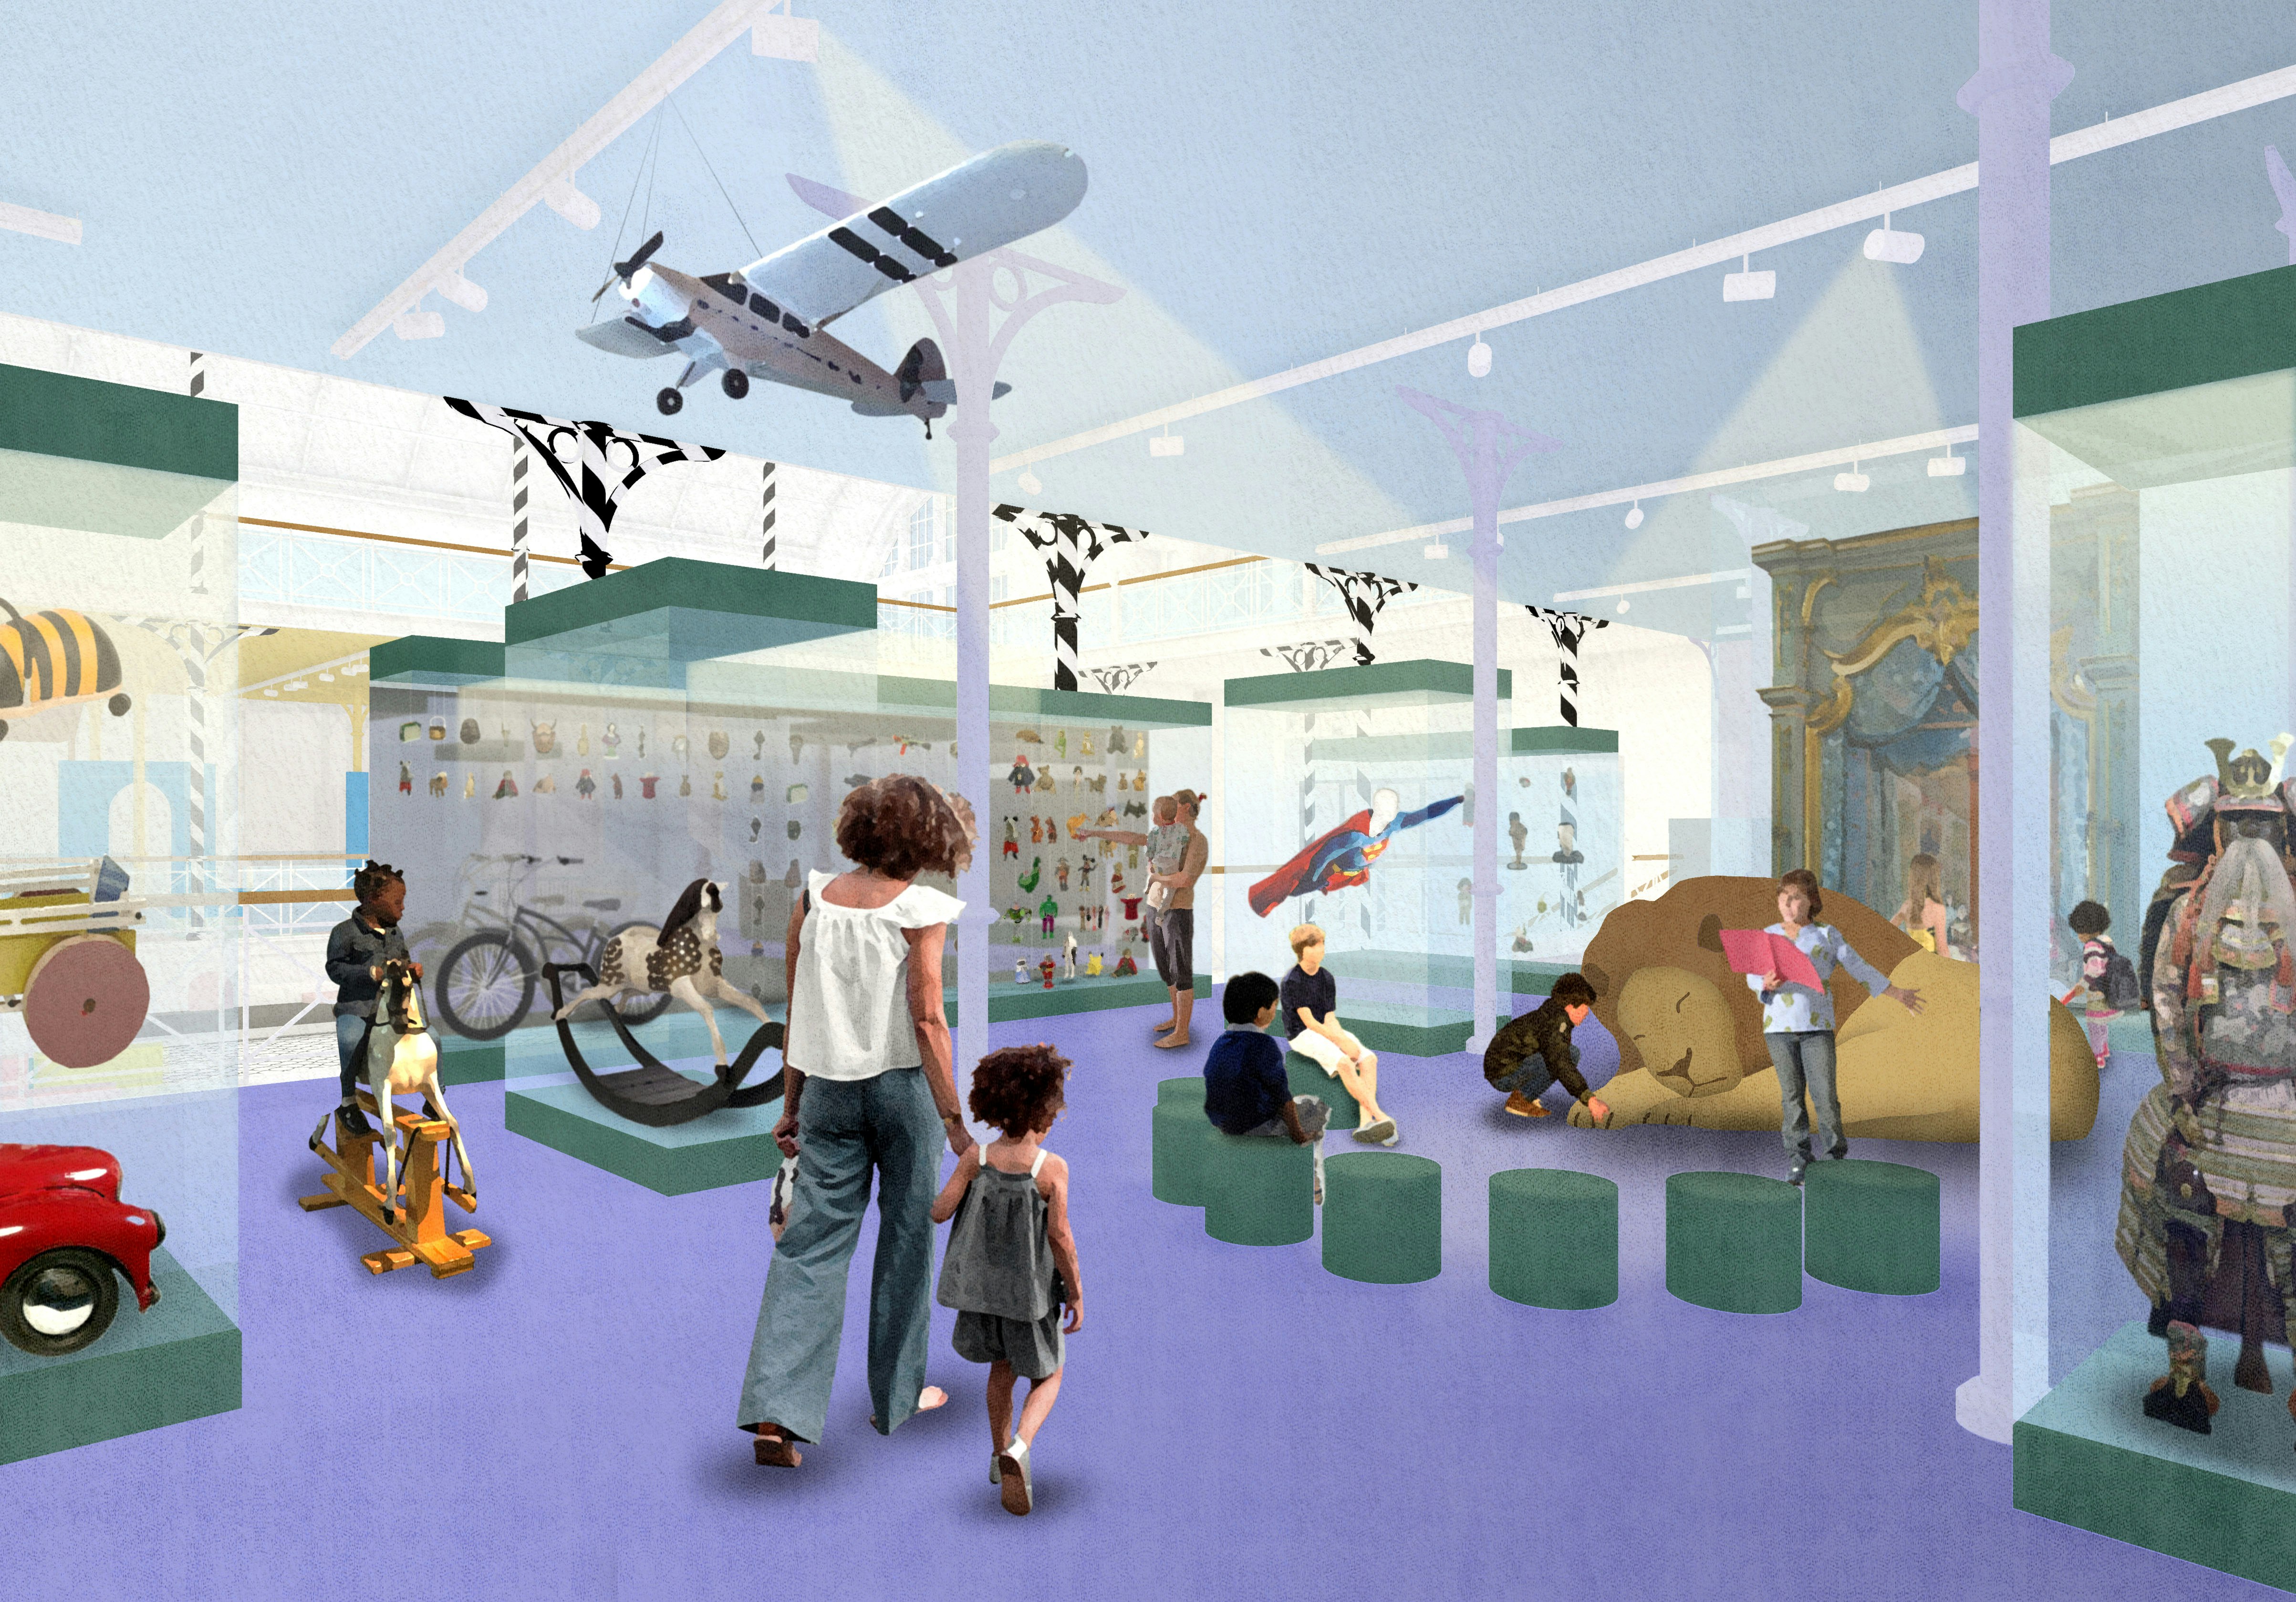 Architectural rendering of a design exhibit in children's museum